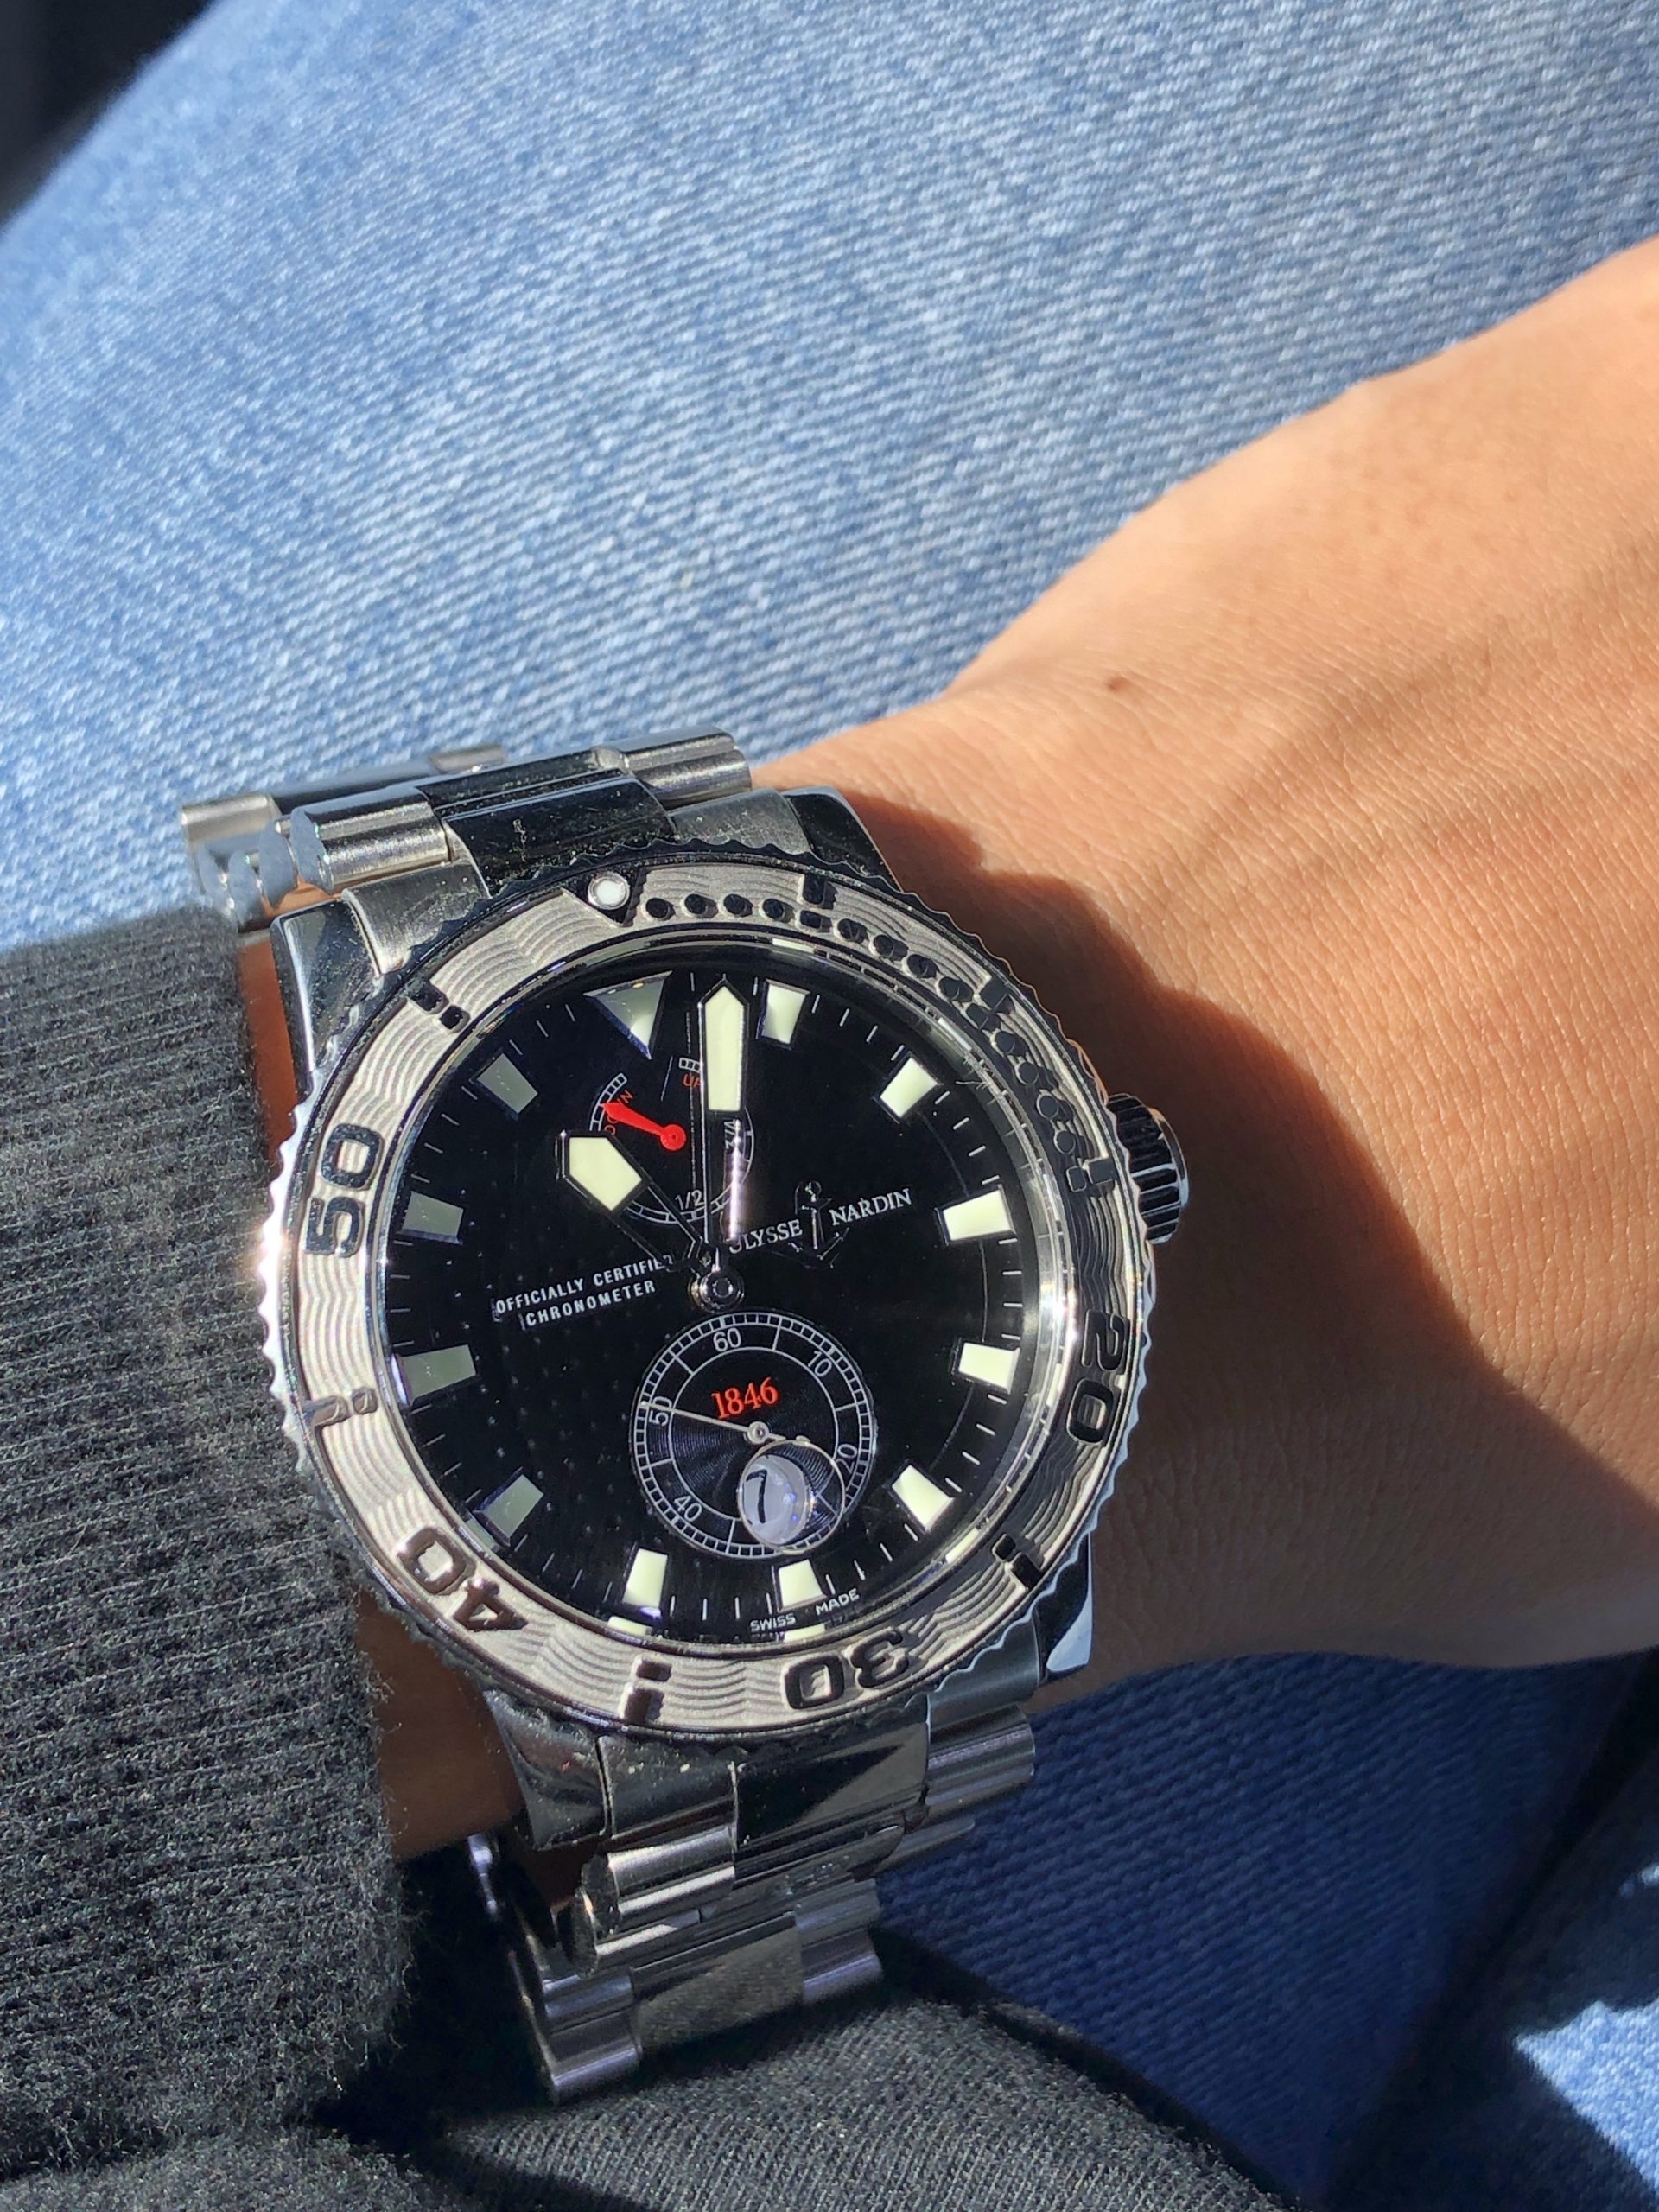 nardin ulysse marine chronometer watch on wrist